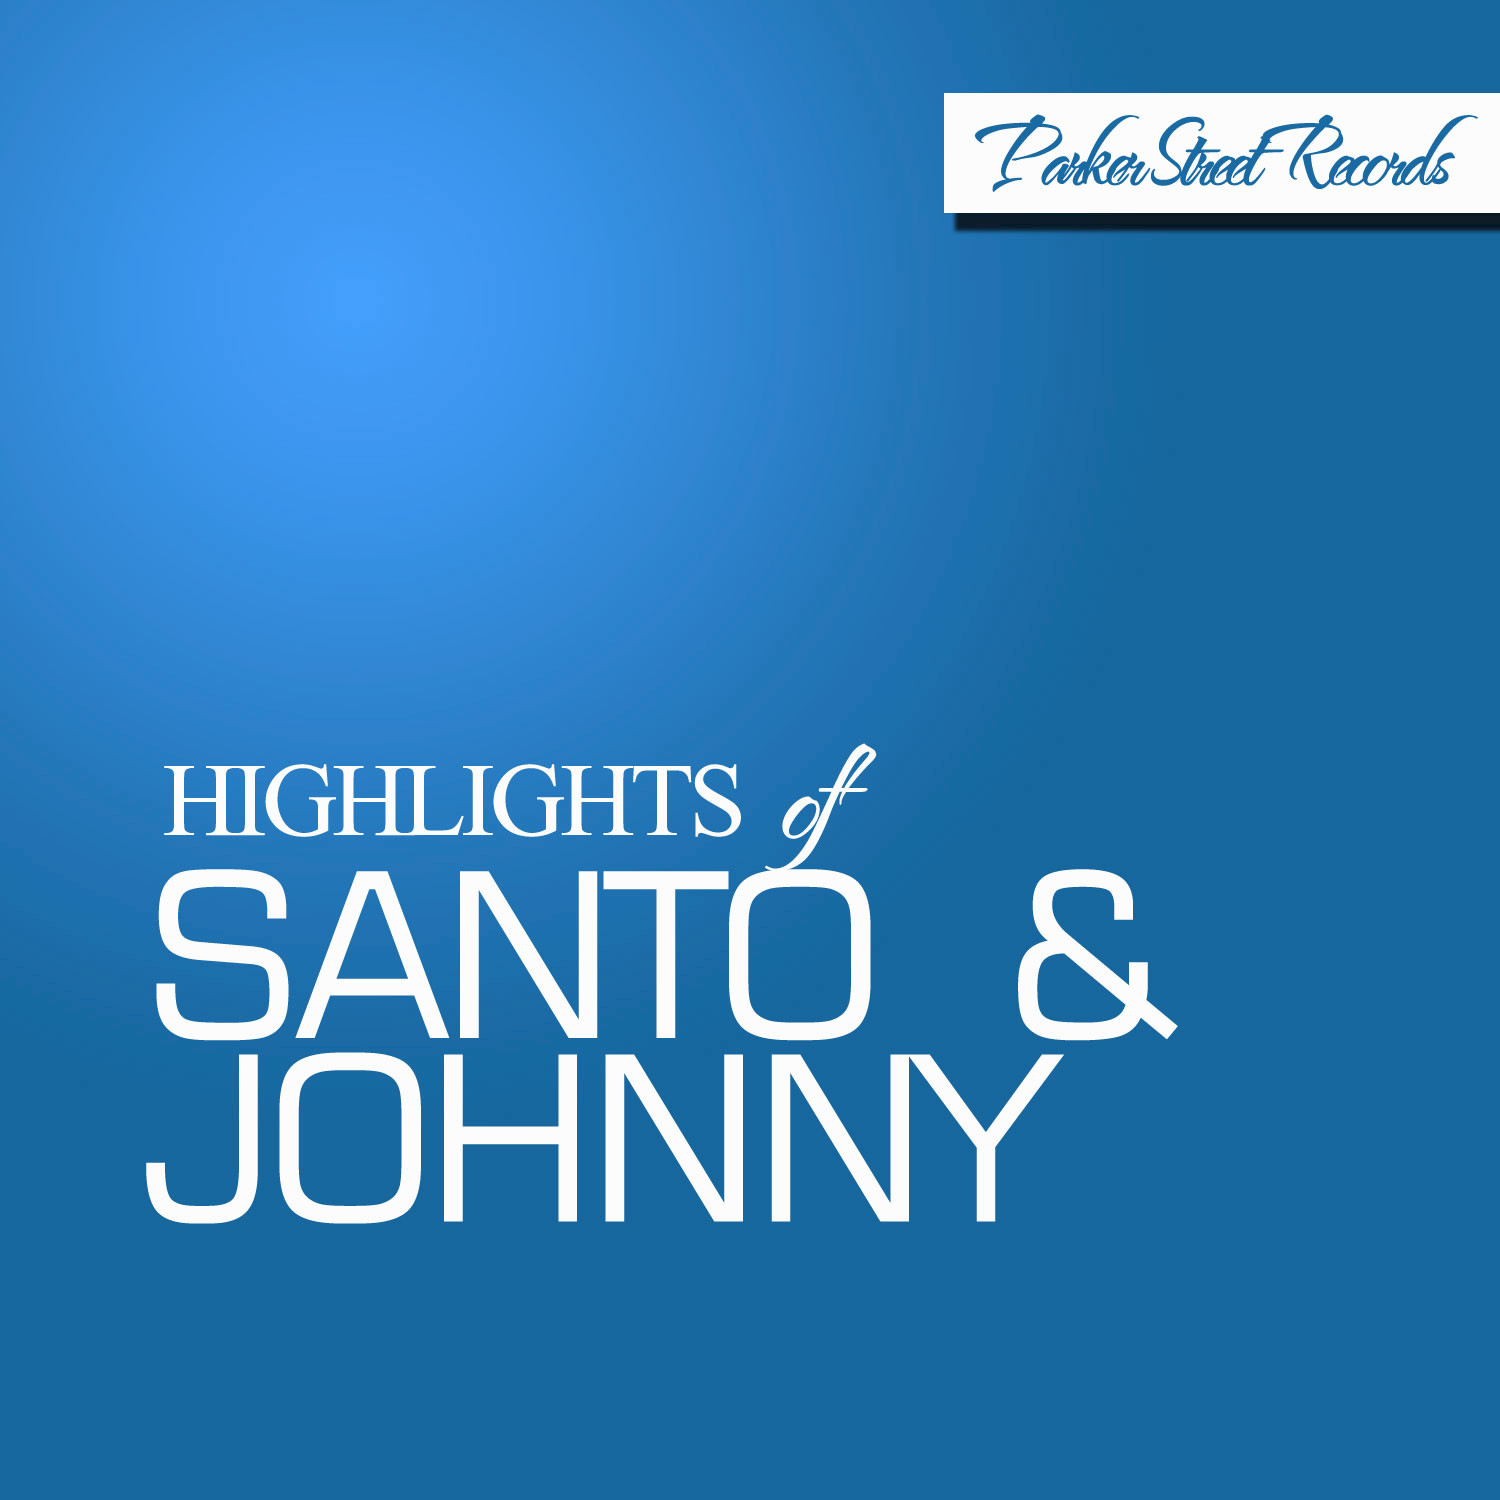 Highlights of Santo & Johnny